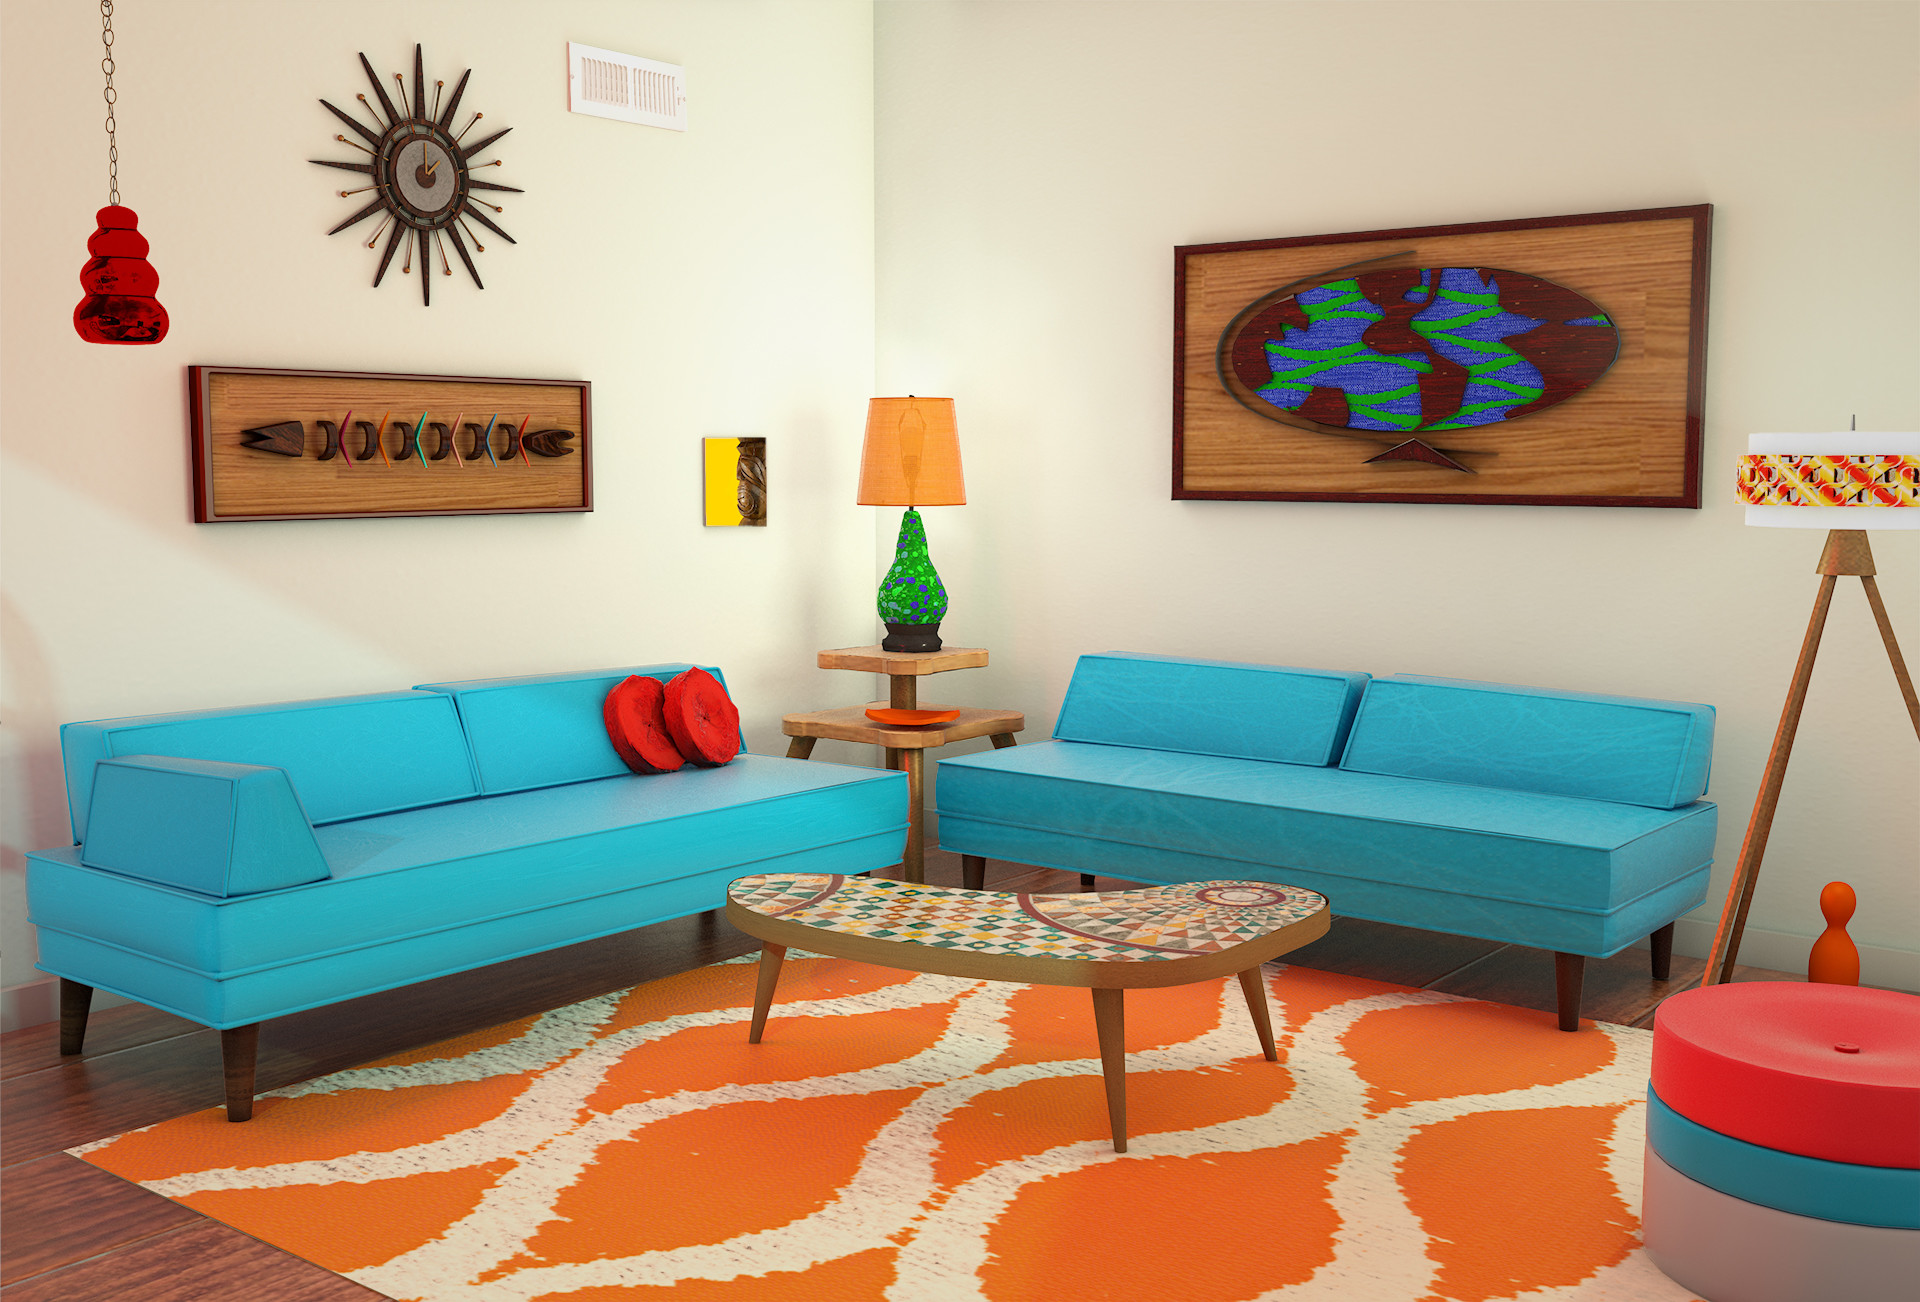 70s living room makeover